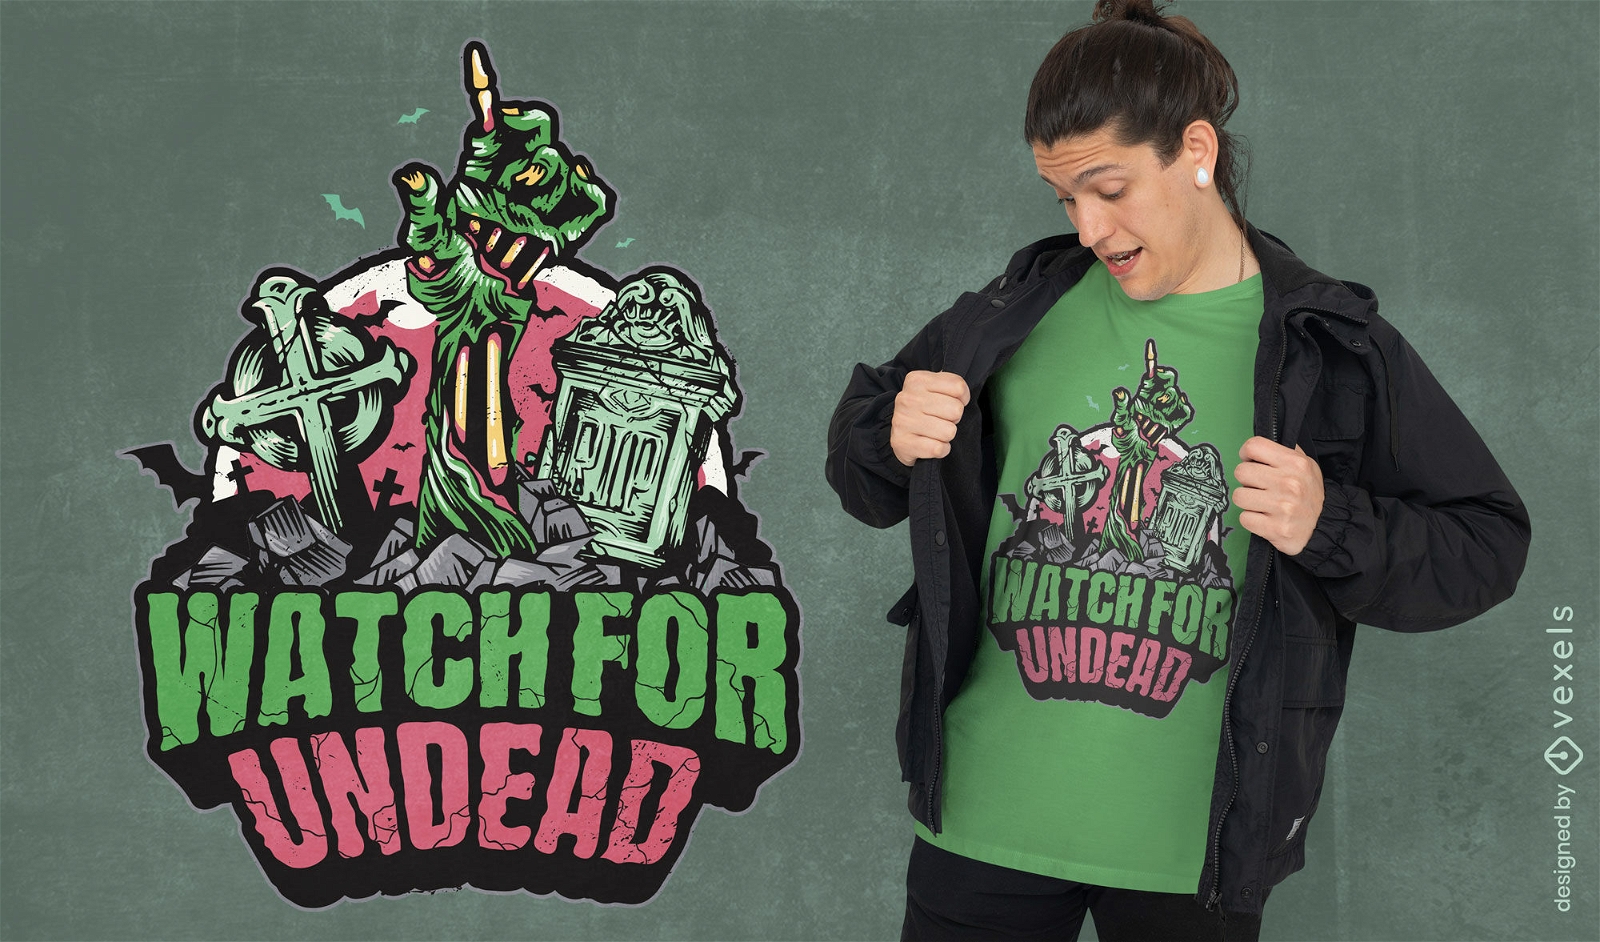 Watch for undead Halloween t-shirt design